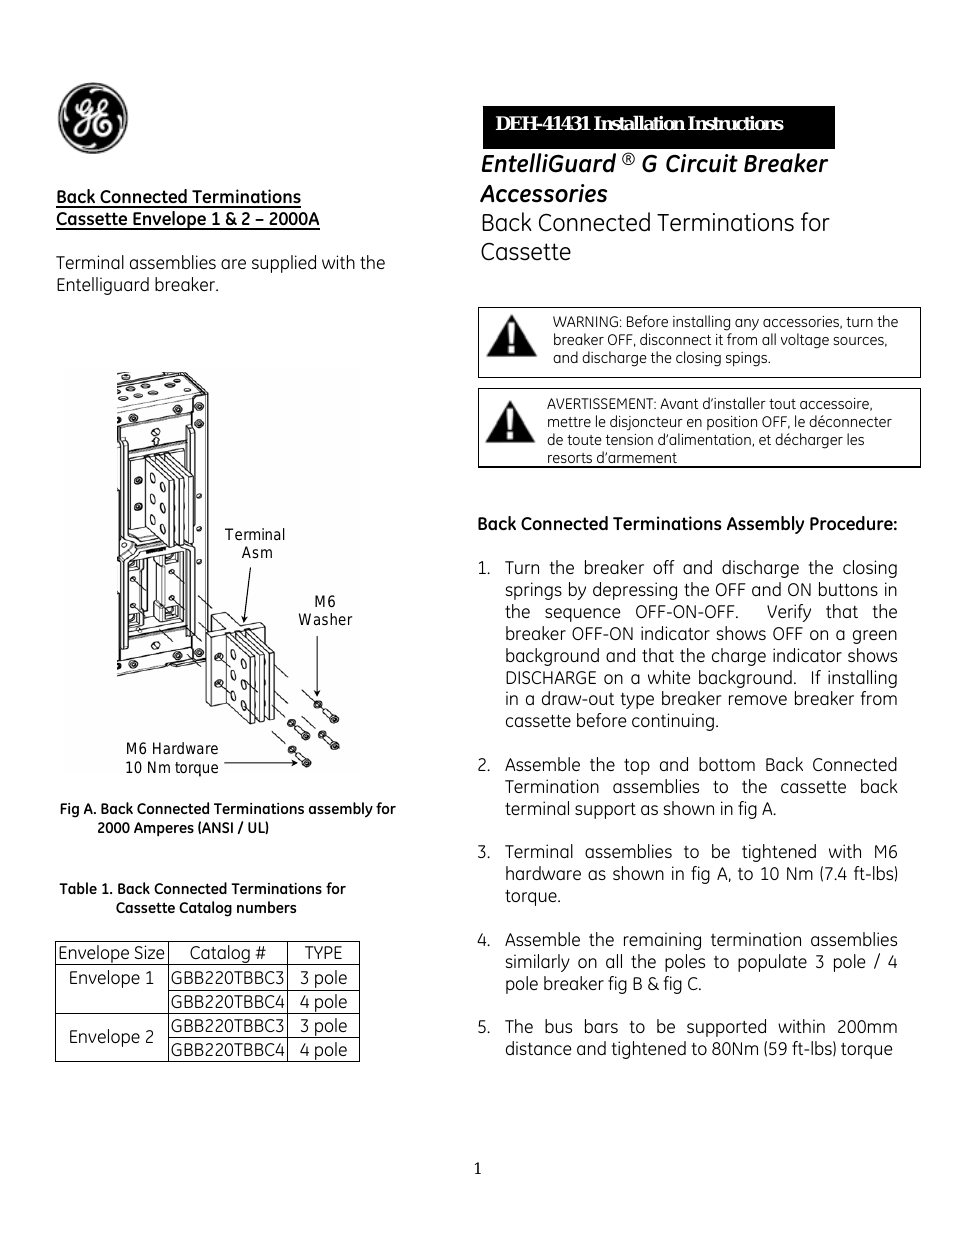 EntelliGuard G Back Connected Terminations for Cassette Envelope 1 & 2 – 2000A